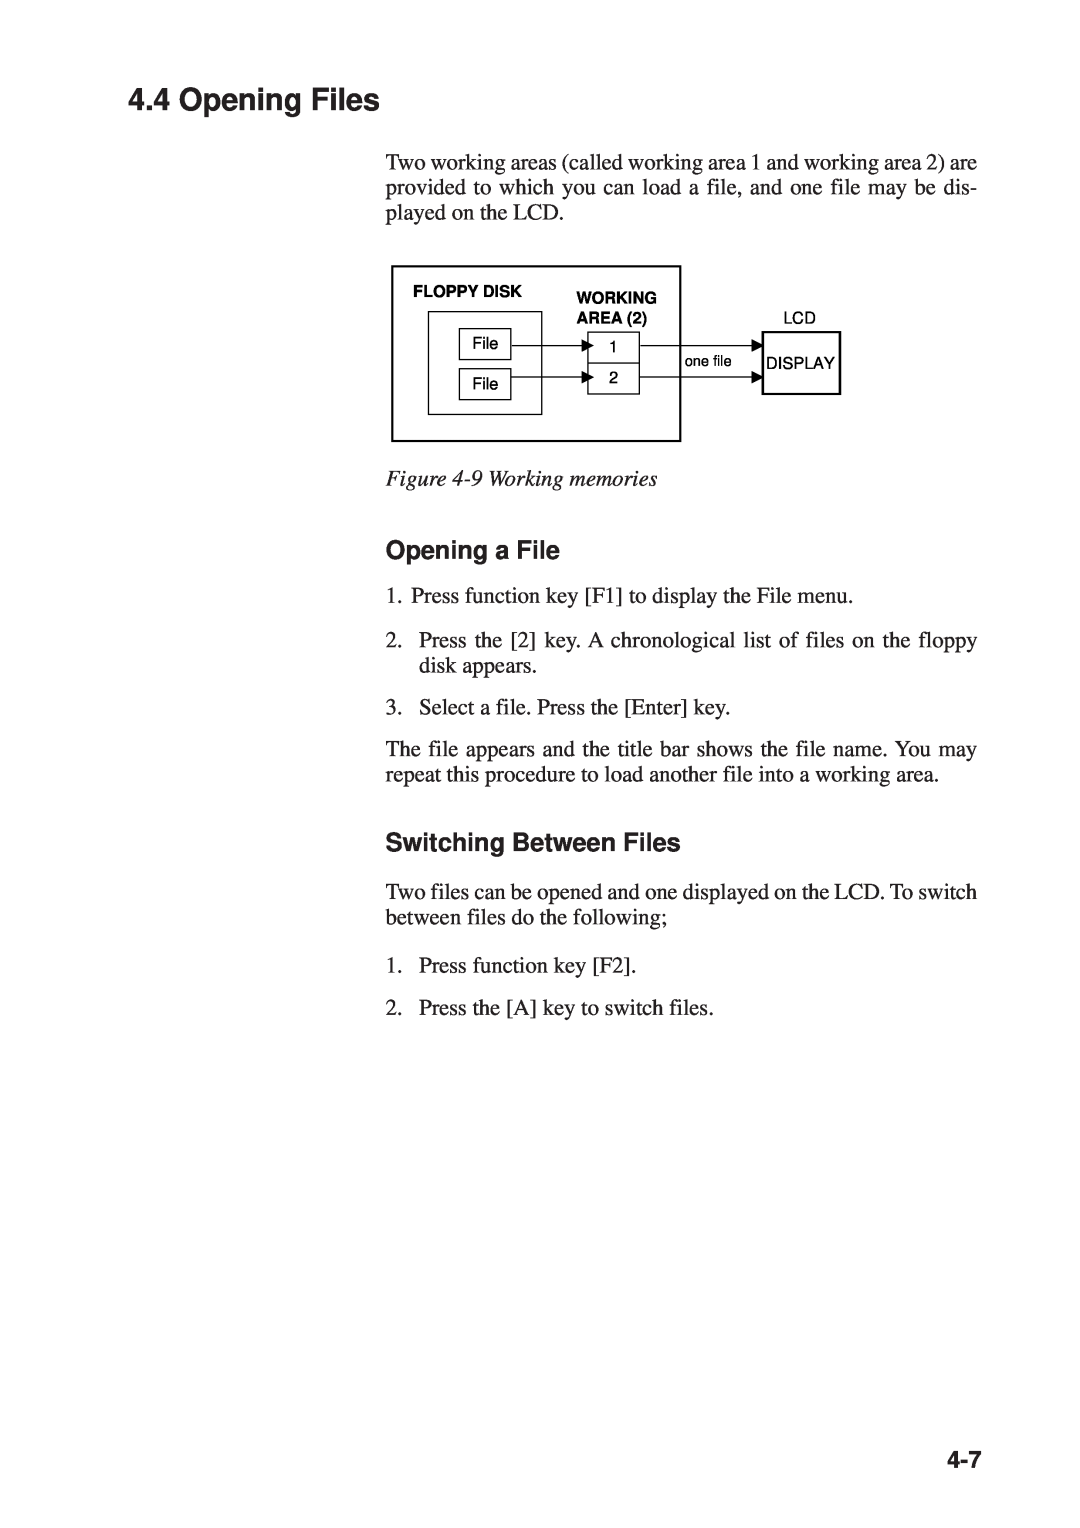 Furuno RC-1500-1T manual Opening Files, Opening a File, Switching Between Files, 9 Working memories 